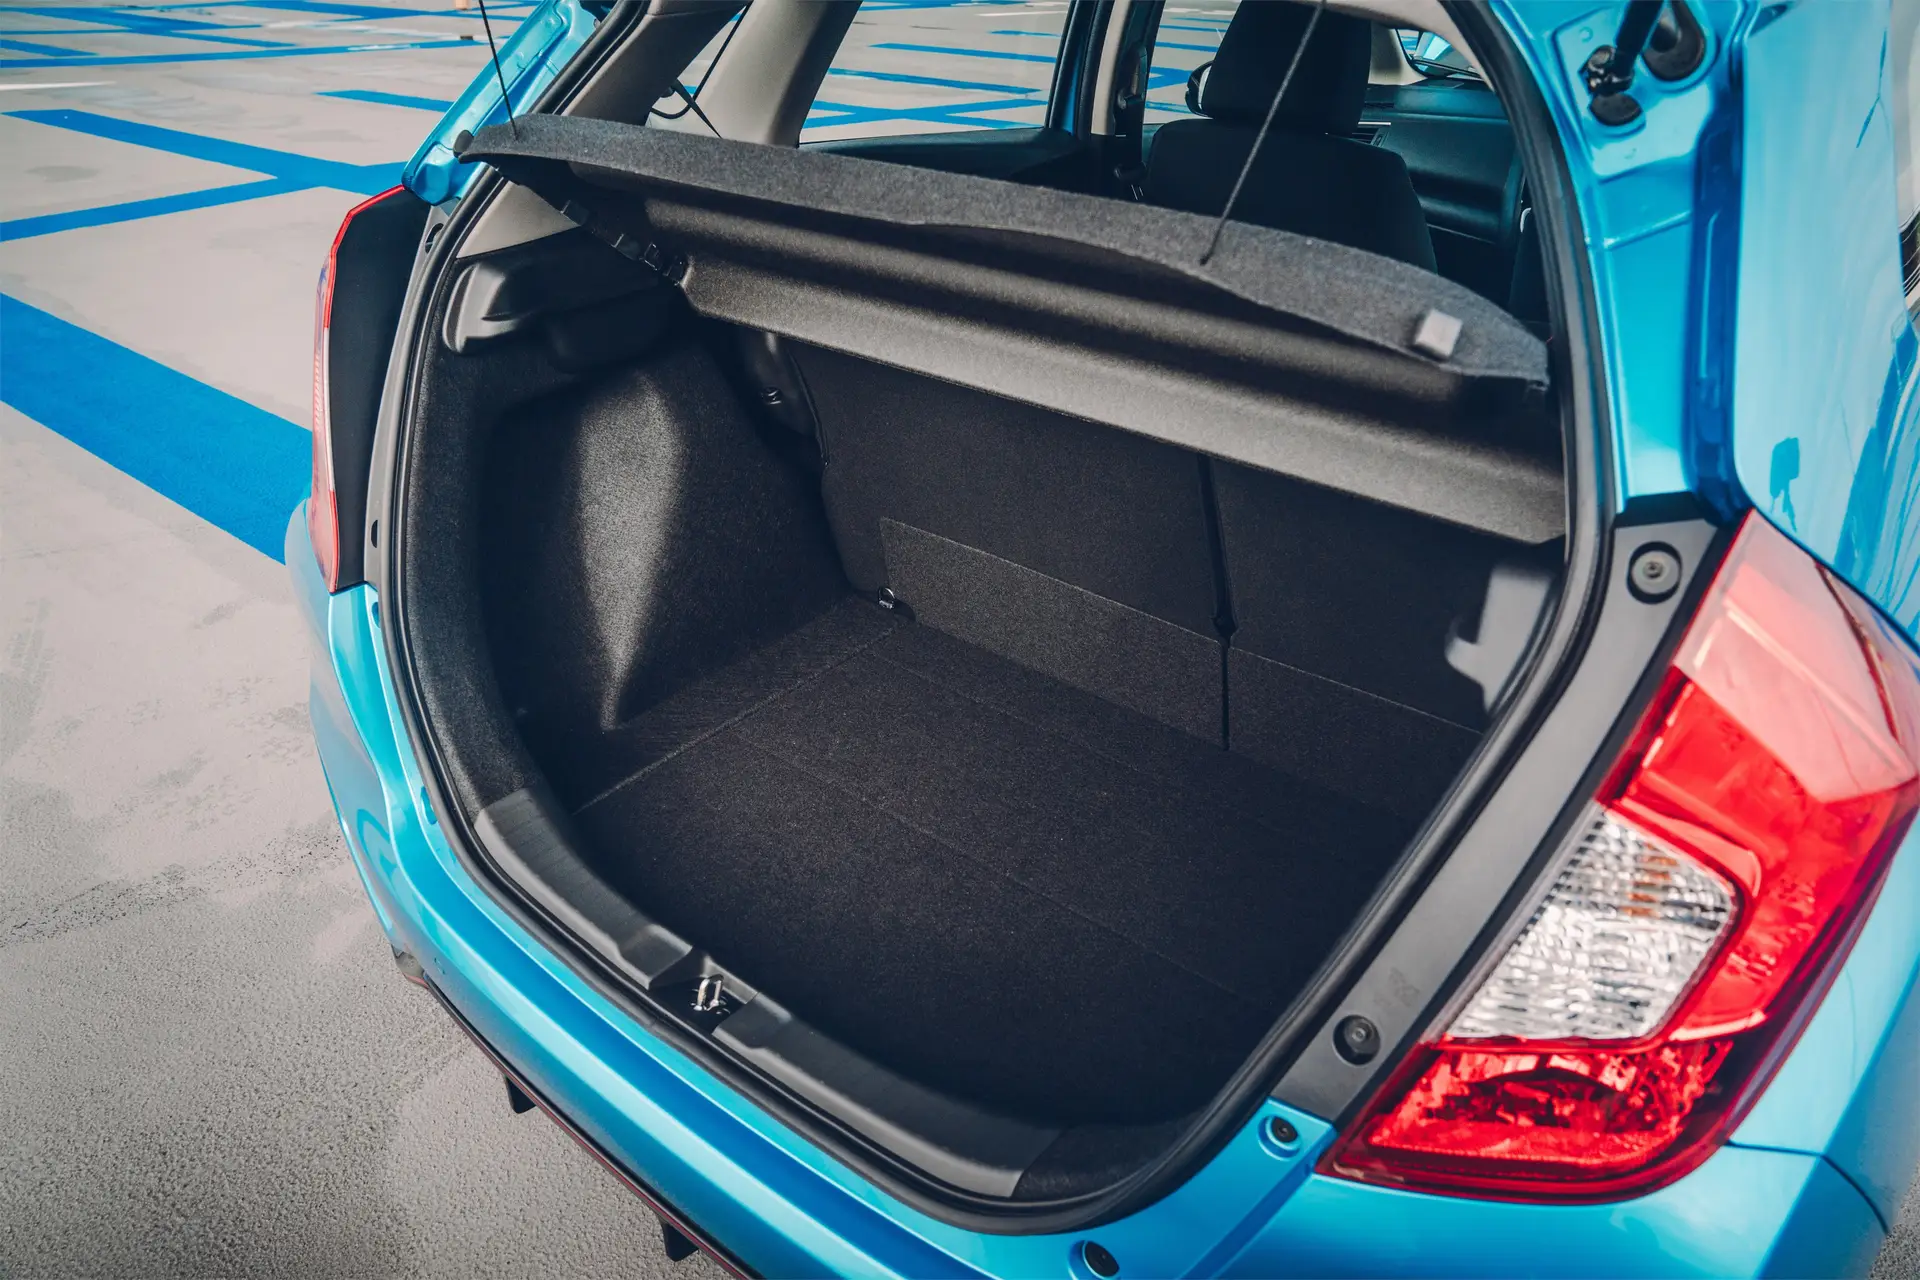 Honda Jazz (2015-2020) Review: interior close up photo of the Honda Jazz boot space